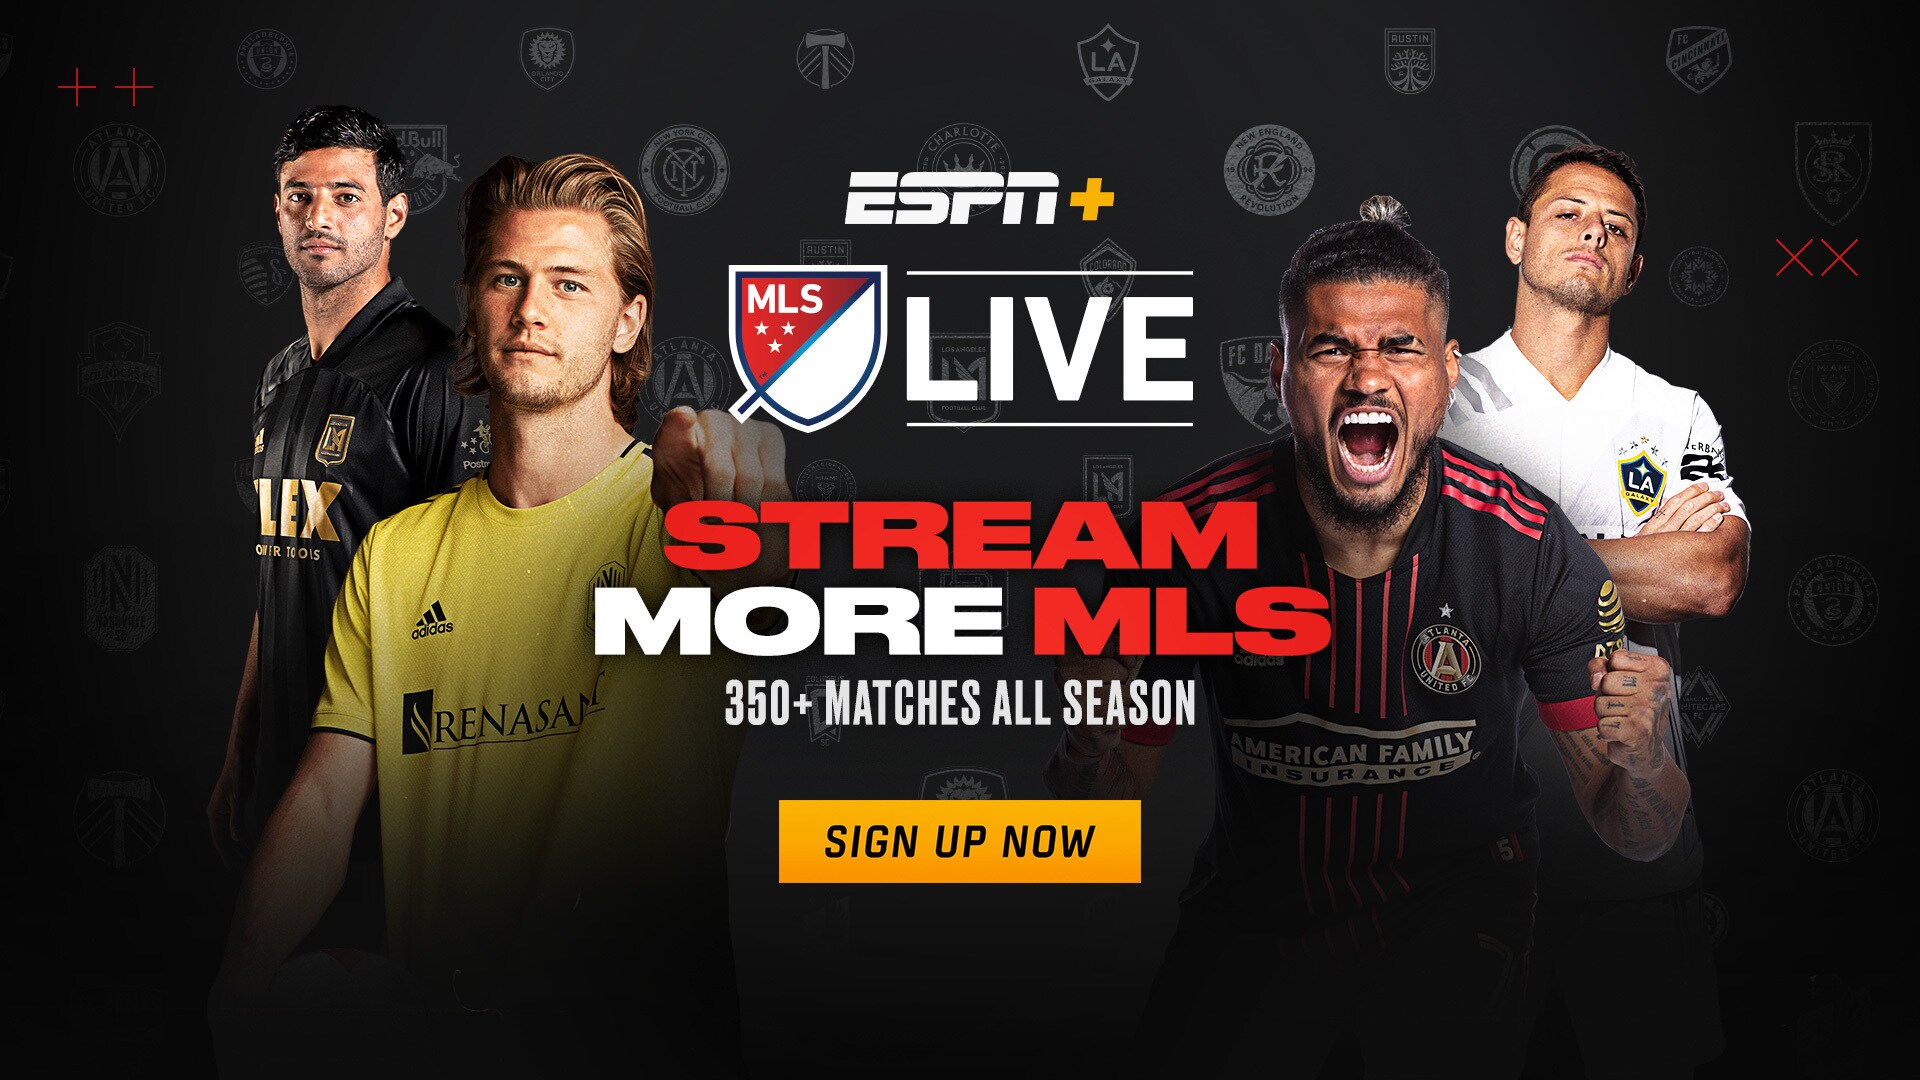 April 8 – 11: MLS, LaLiga and Bundesliga Exclusively on ABC, ESPN, ESPN+ and ESPN Deportes